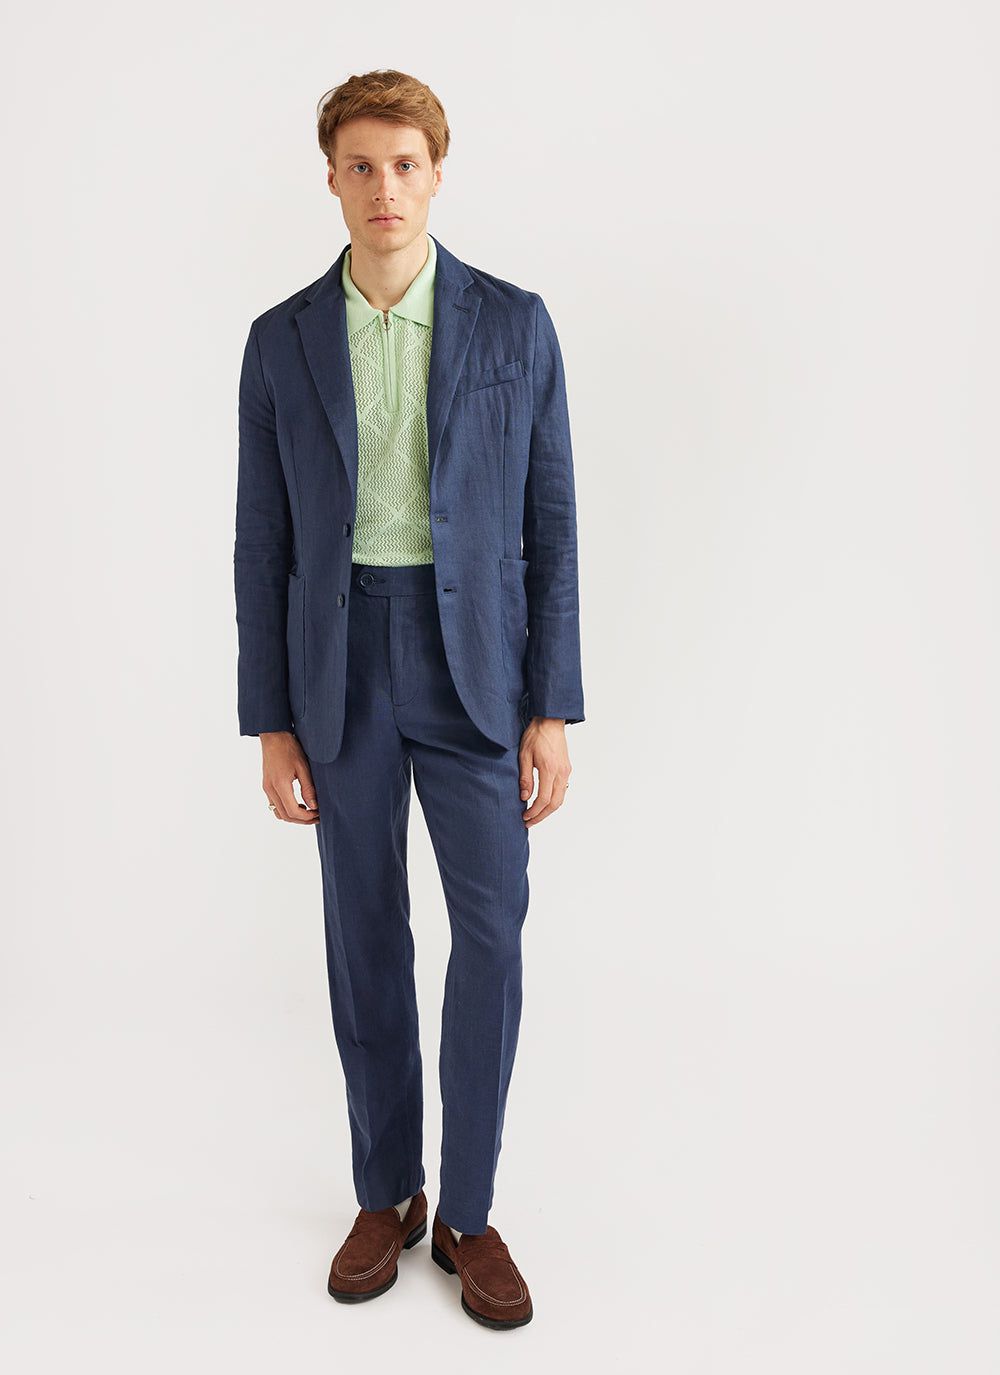 Men's Knitted Zip Polo Shirt | Nawa | Mint | Percival Menswear